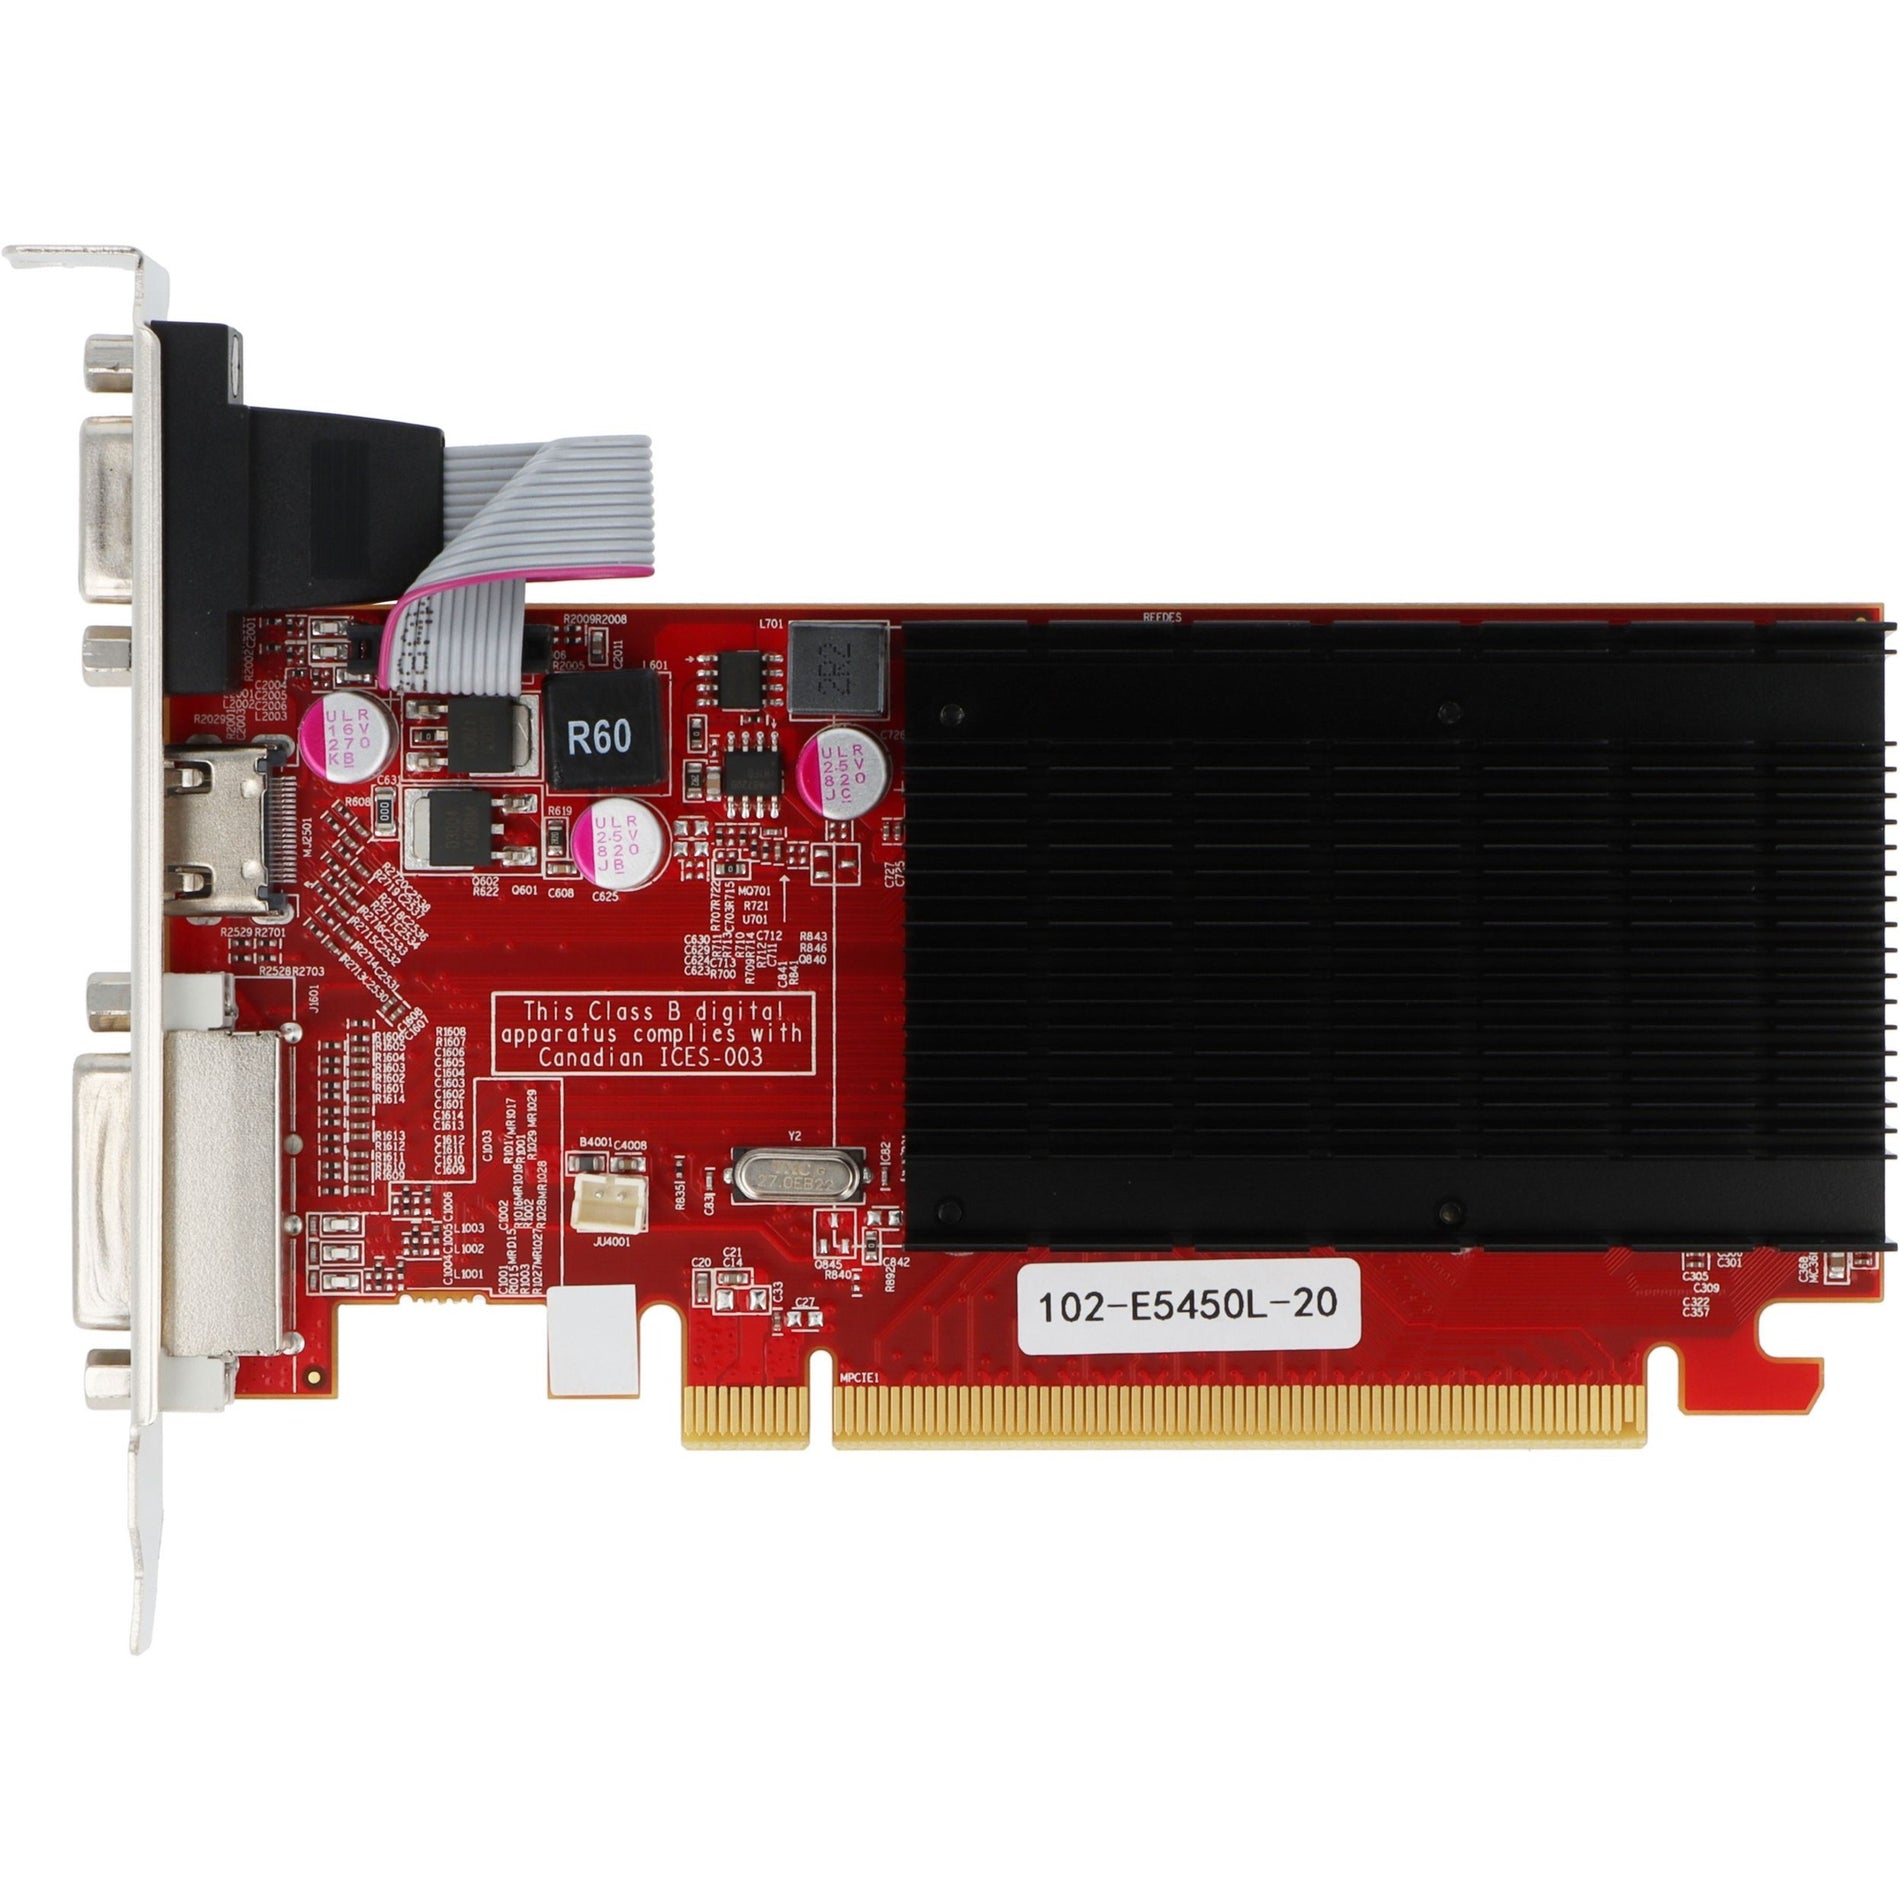 VisionTek 900860 AMD Radeon 5450 Graphic Card, 1GB DDR3, DVI-I, HDMI, VGA